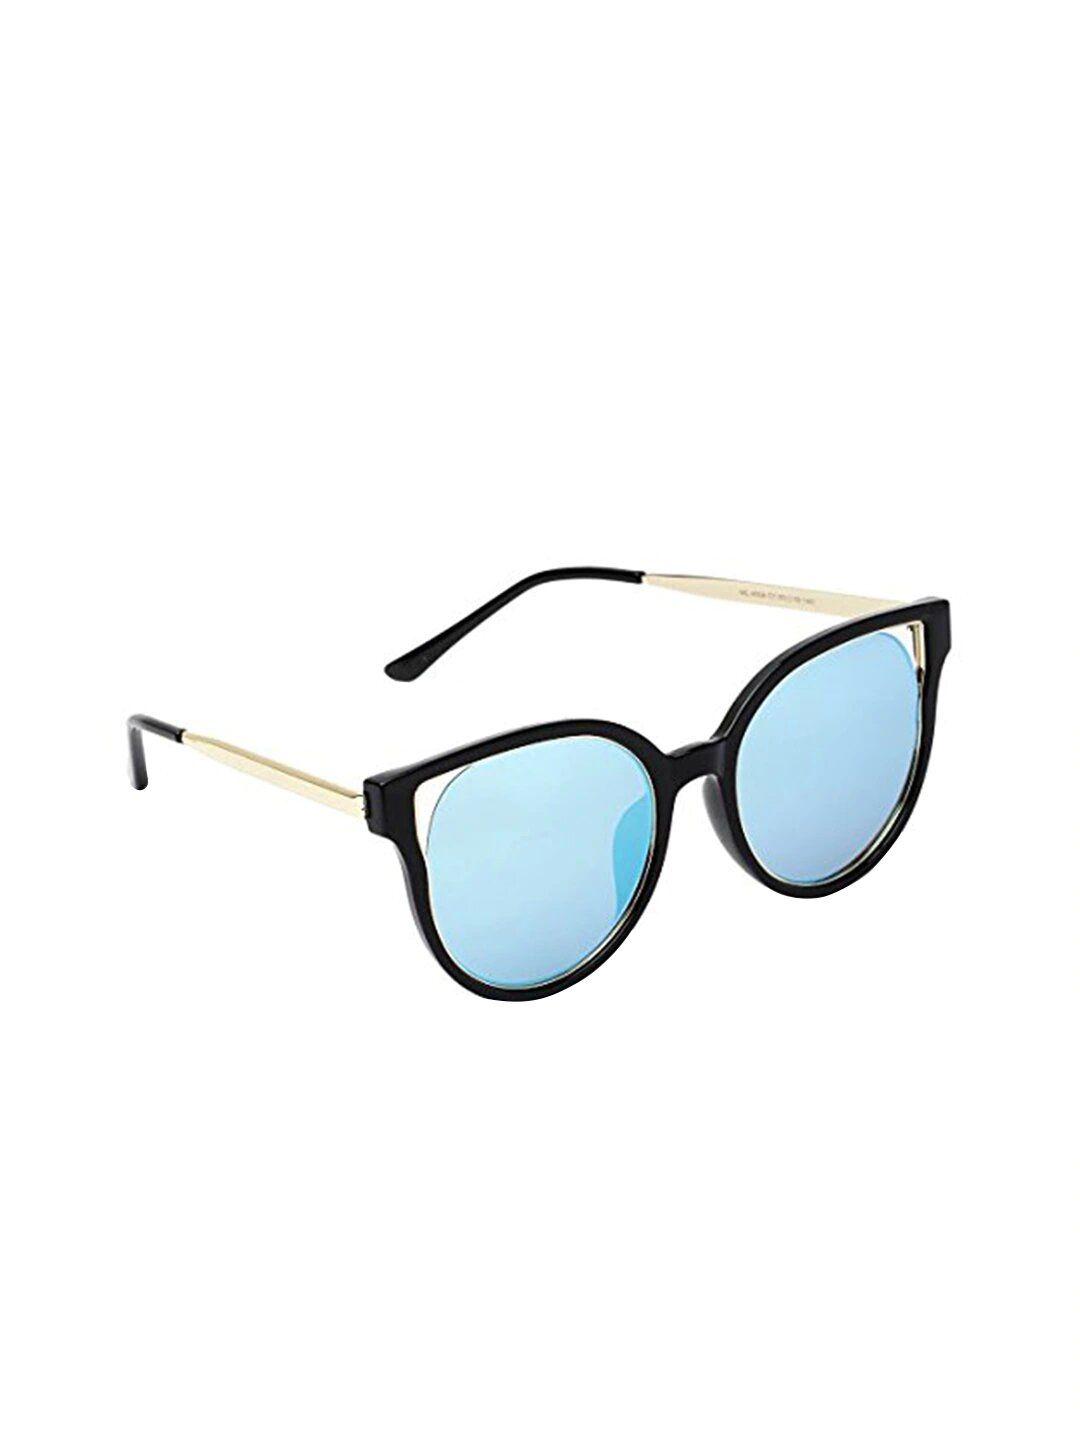 marc louis unisex blue lens & black round sunglasses with uv protected lens 4004 c1